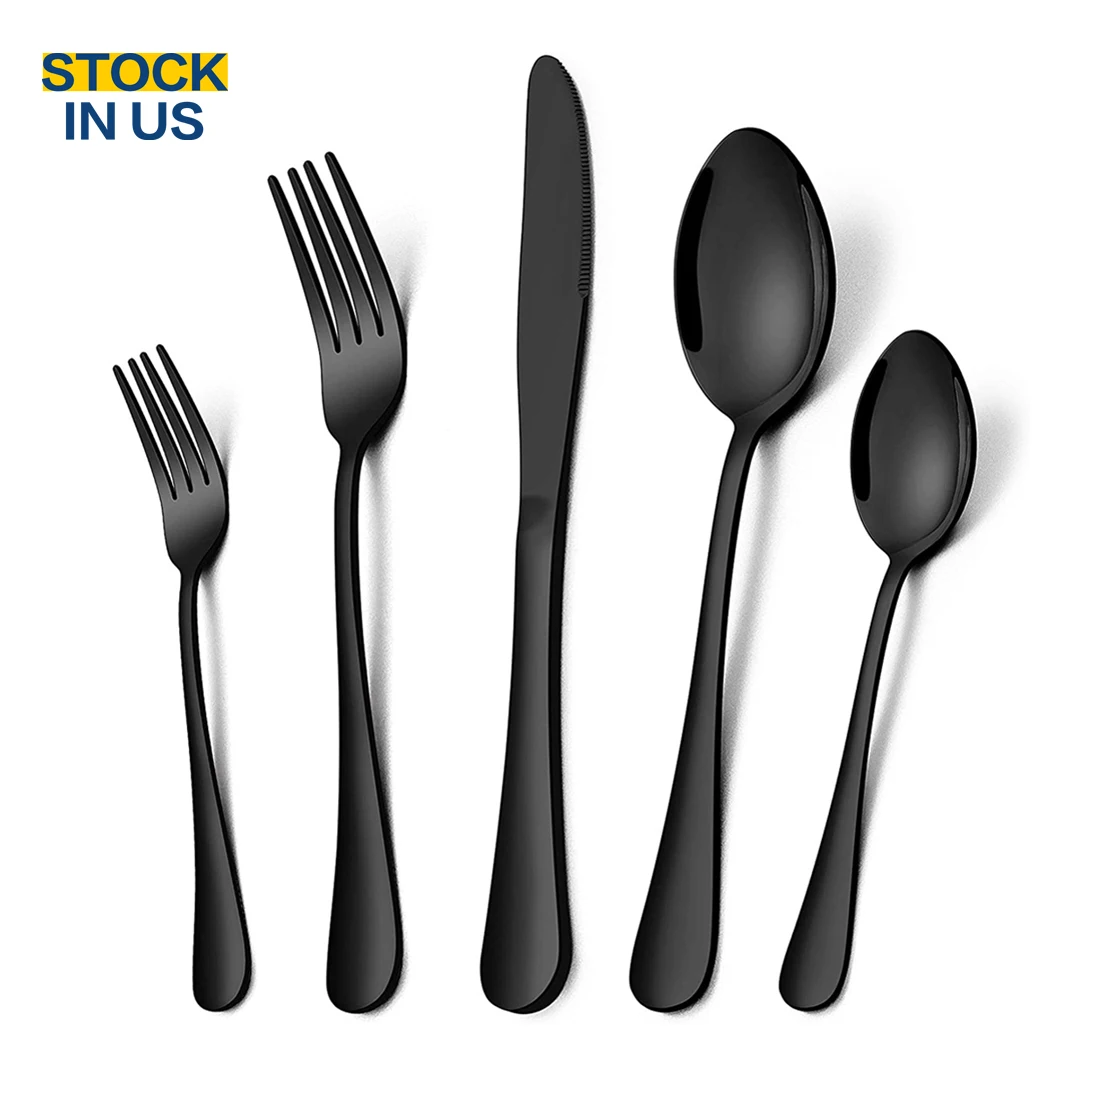 

US STOCKS black silverware cutlery set stainless steel cutlery set case, Silver, black, rose gold, gold